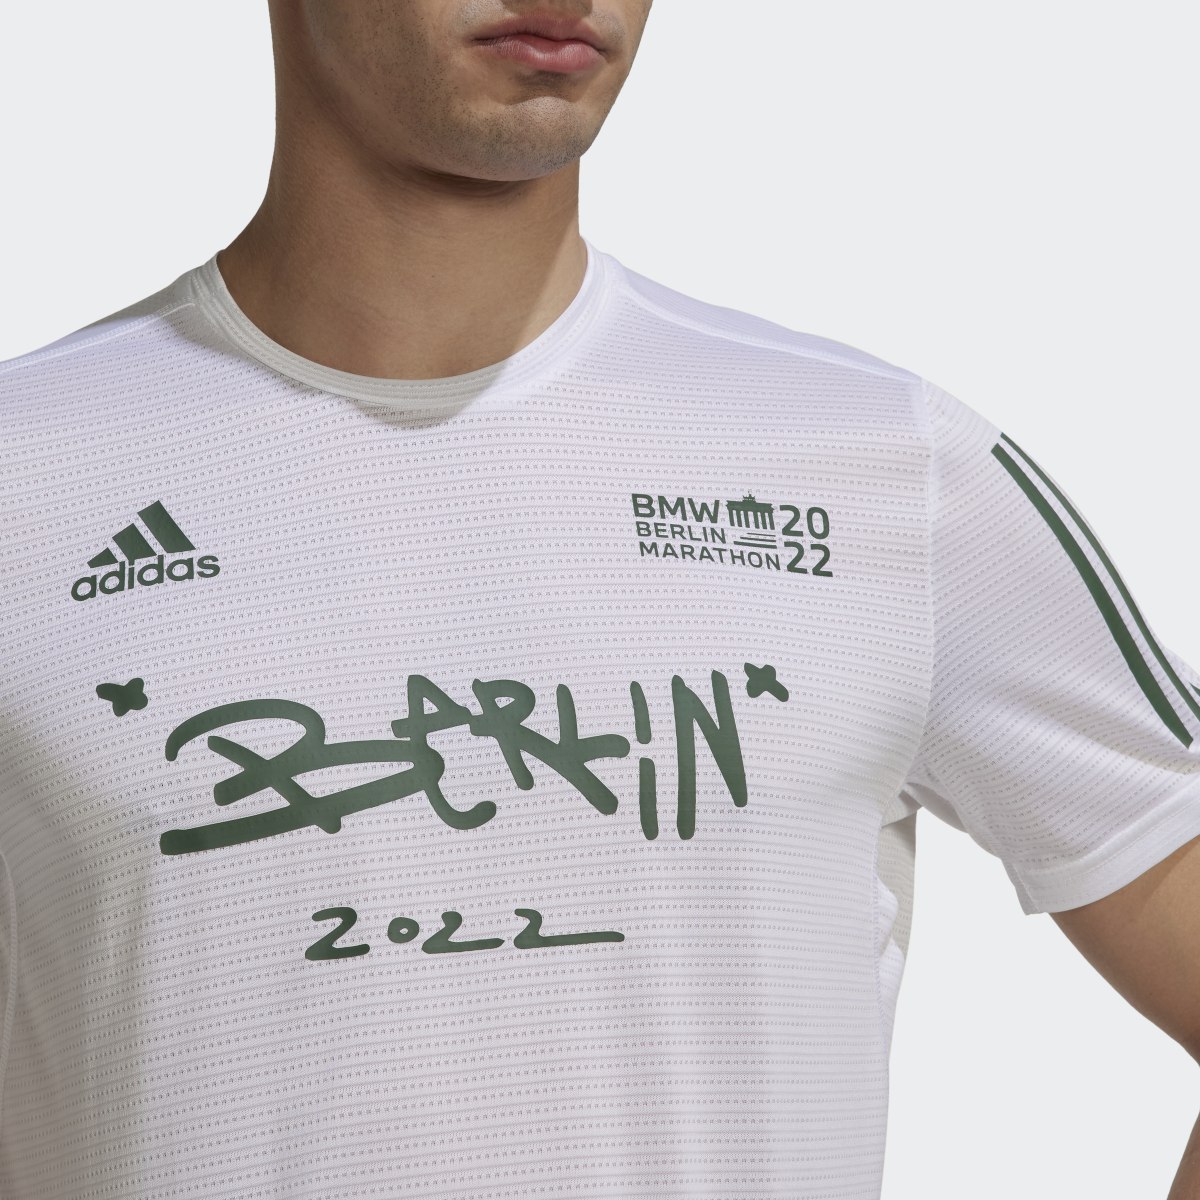 Adidas Berlin Marathon 2022 T-Shirt. 8